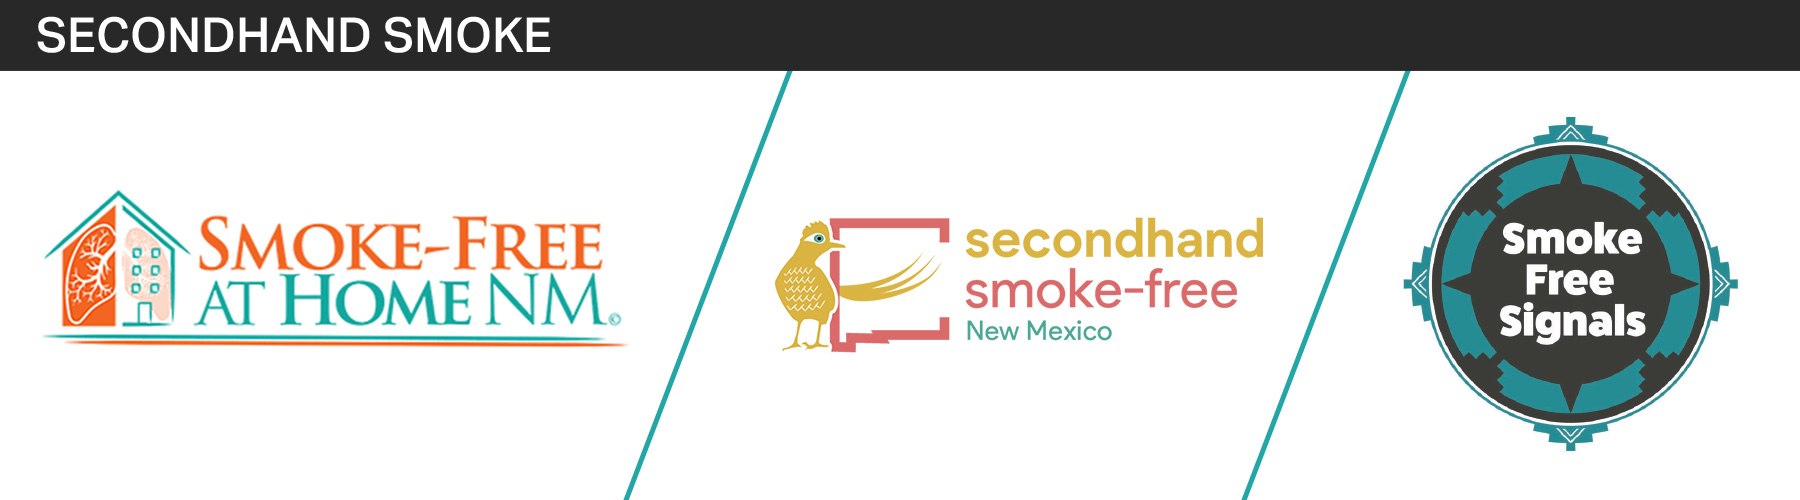 Secondhand Smoke slide